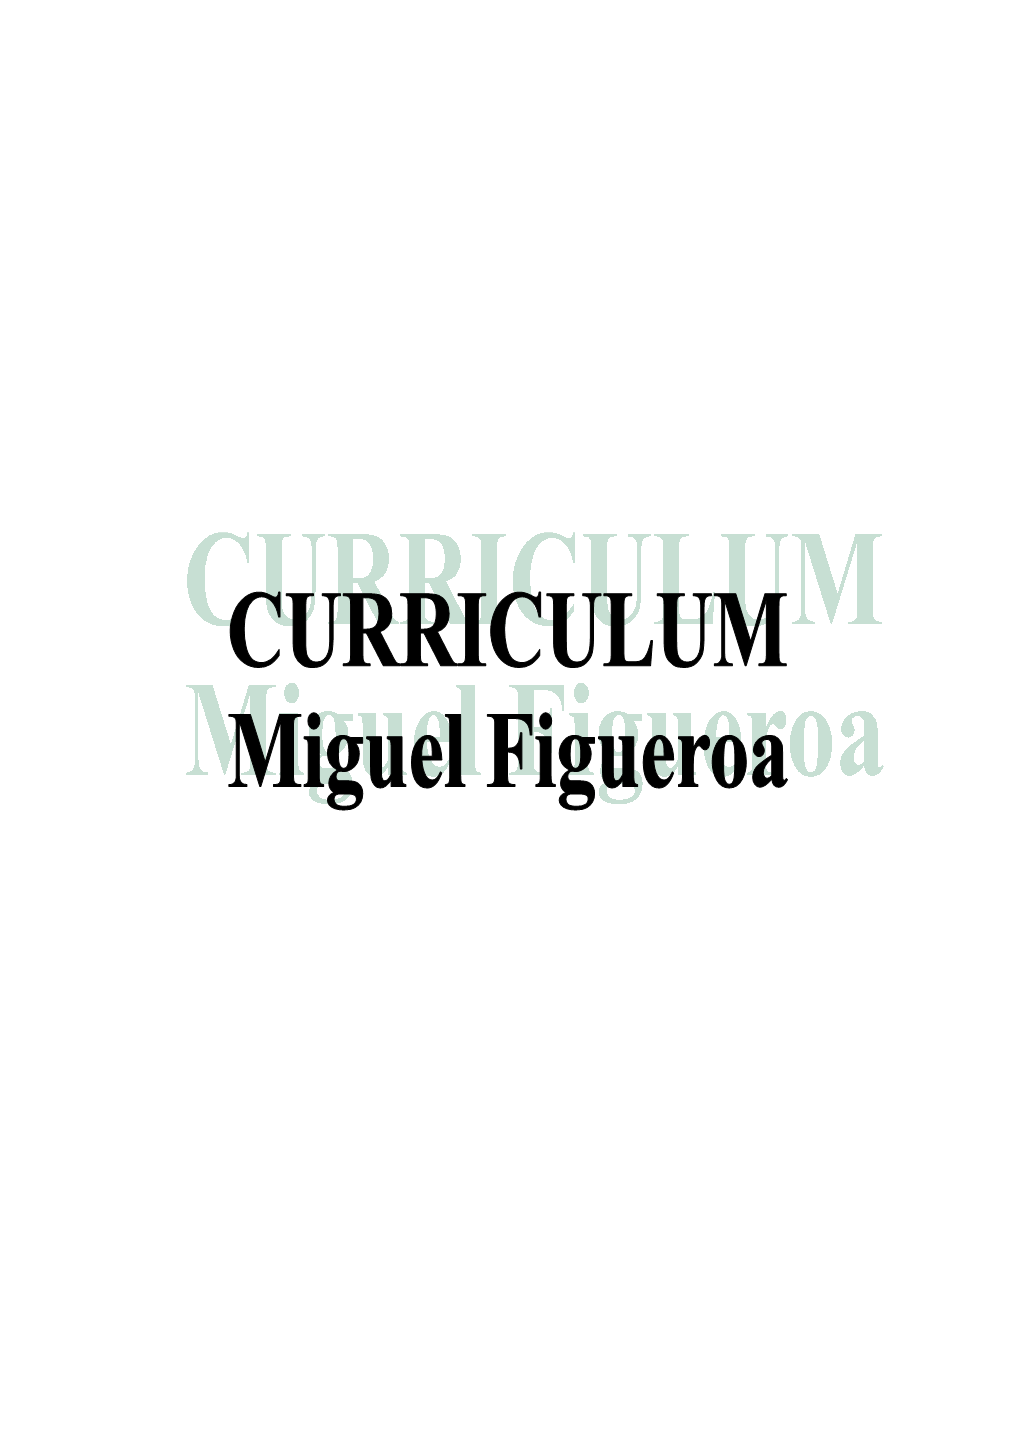 Miguel-Figueroa.Pdf (99.95Kb)